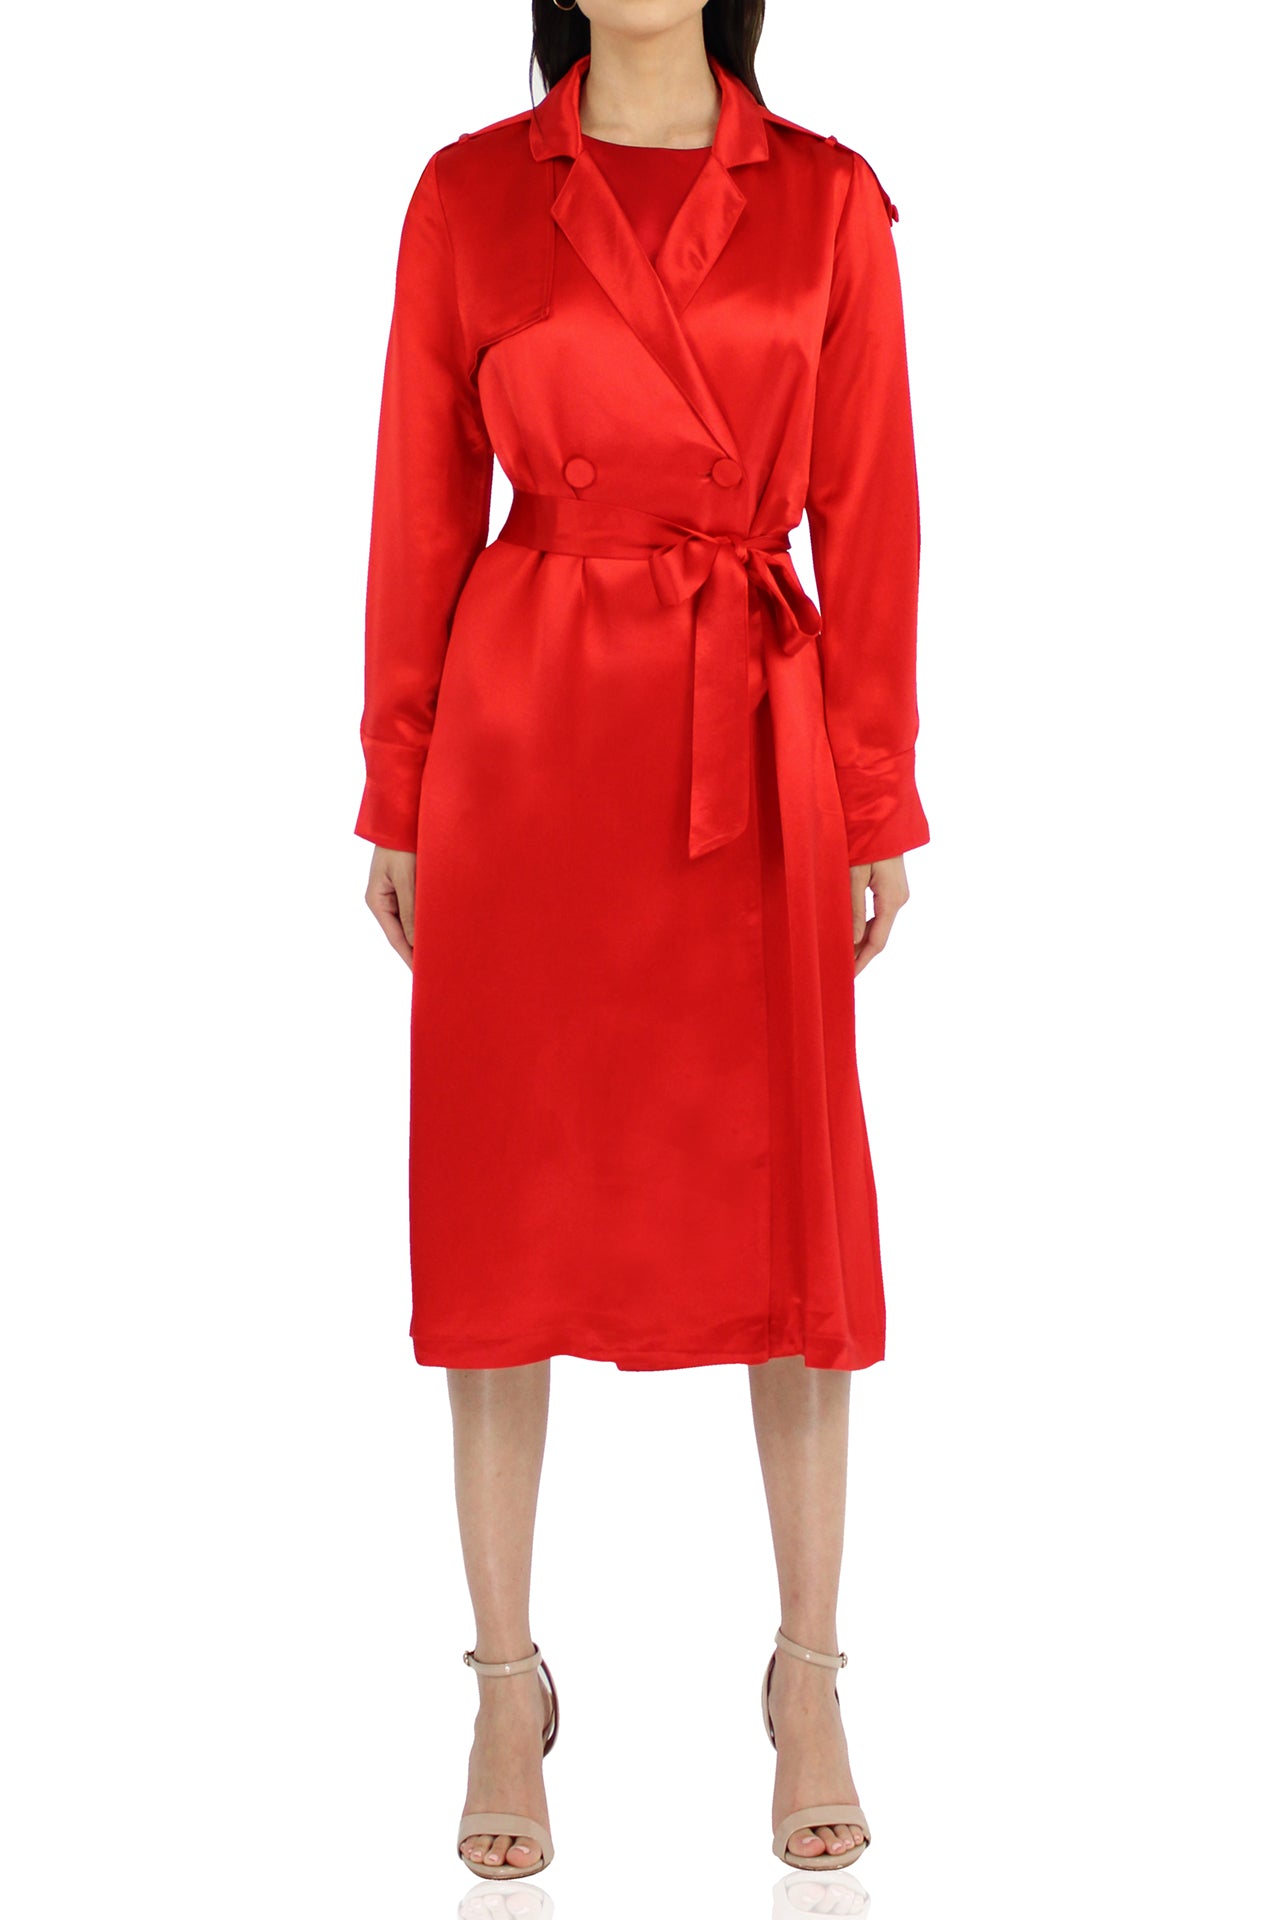 Women-Designer-Red-Robe-Dress-By-Kyle-Richard